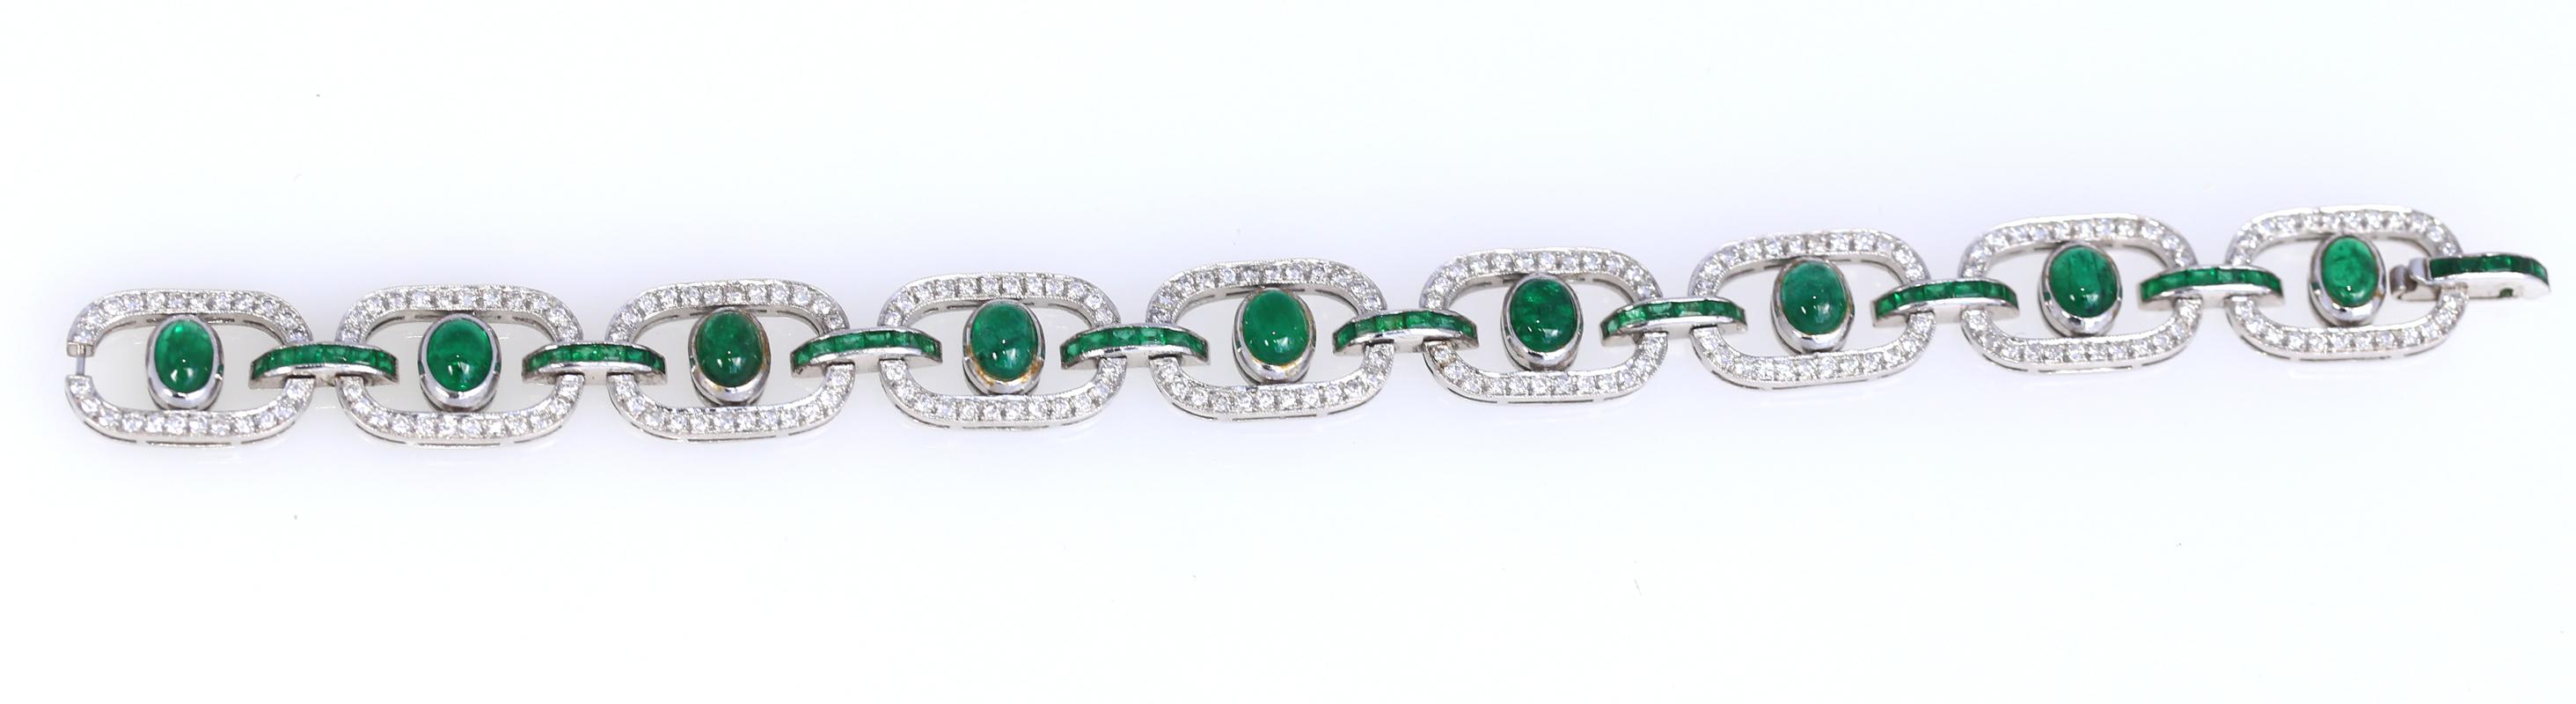 3 Bracelets Set Sapphires Rubies Diamonds Emeralds Necklace Сhoker White Gold For Sale 12